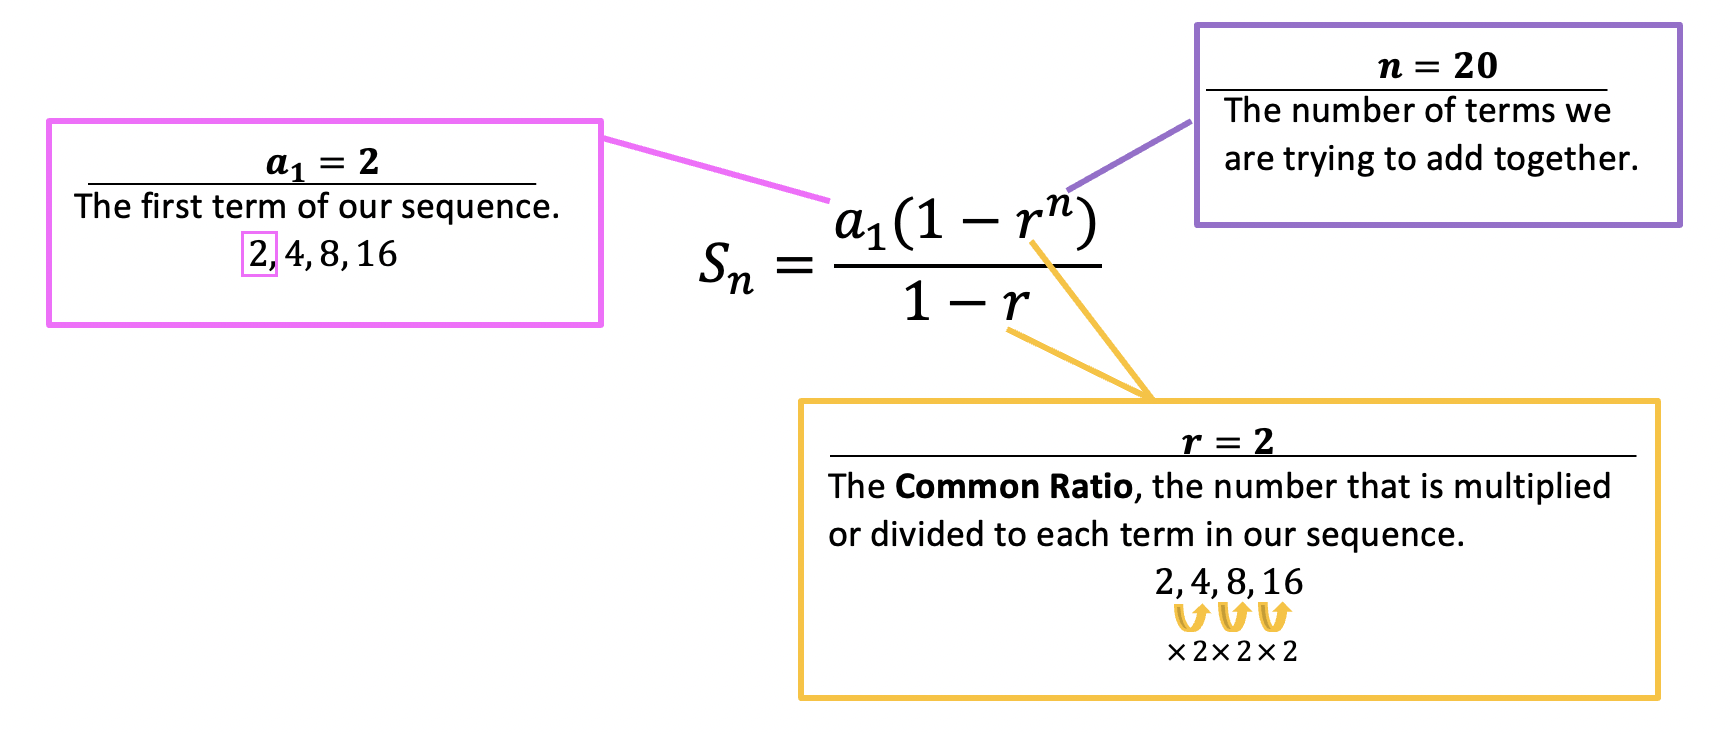 sum of geometric sequence with summation formula calculator